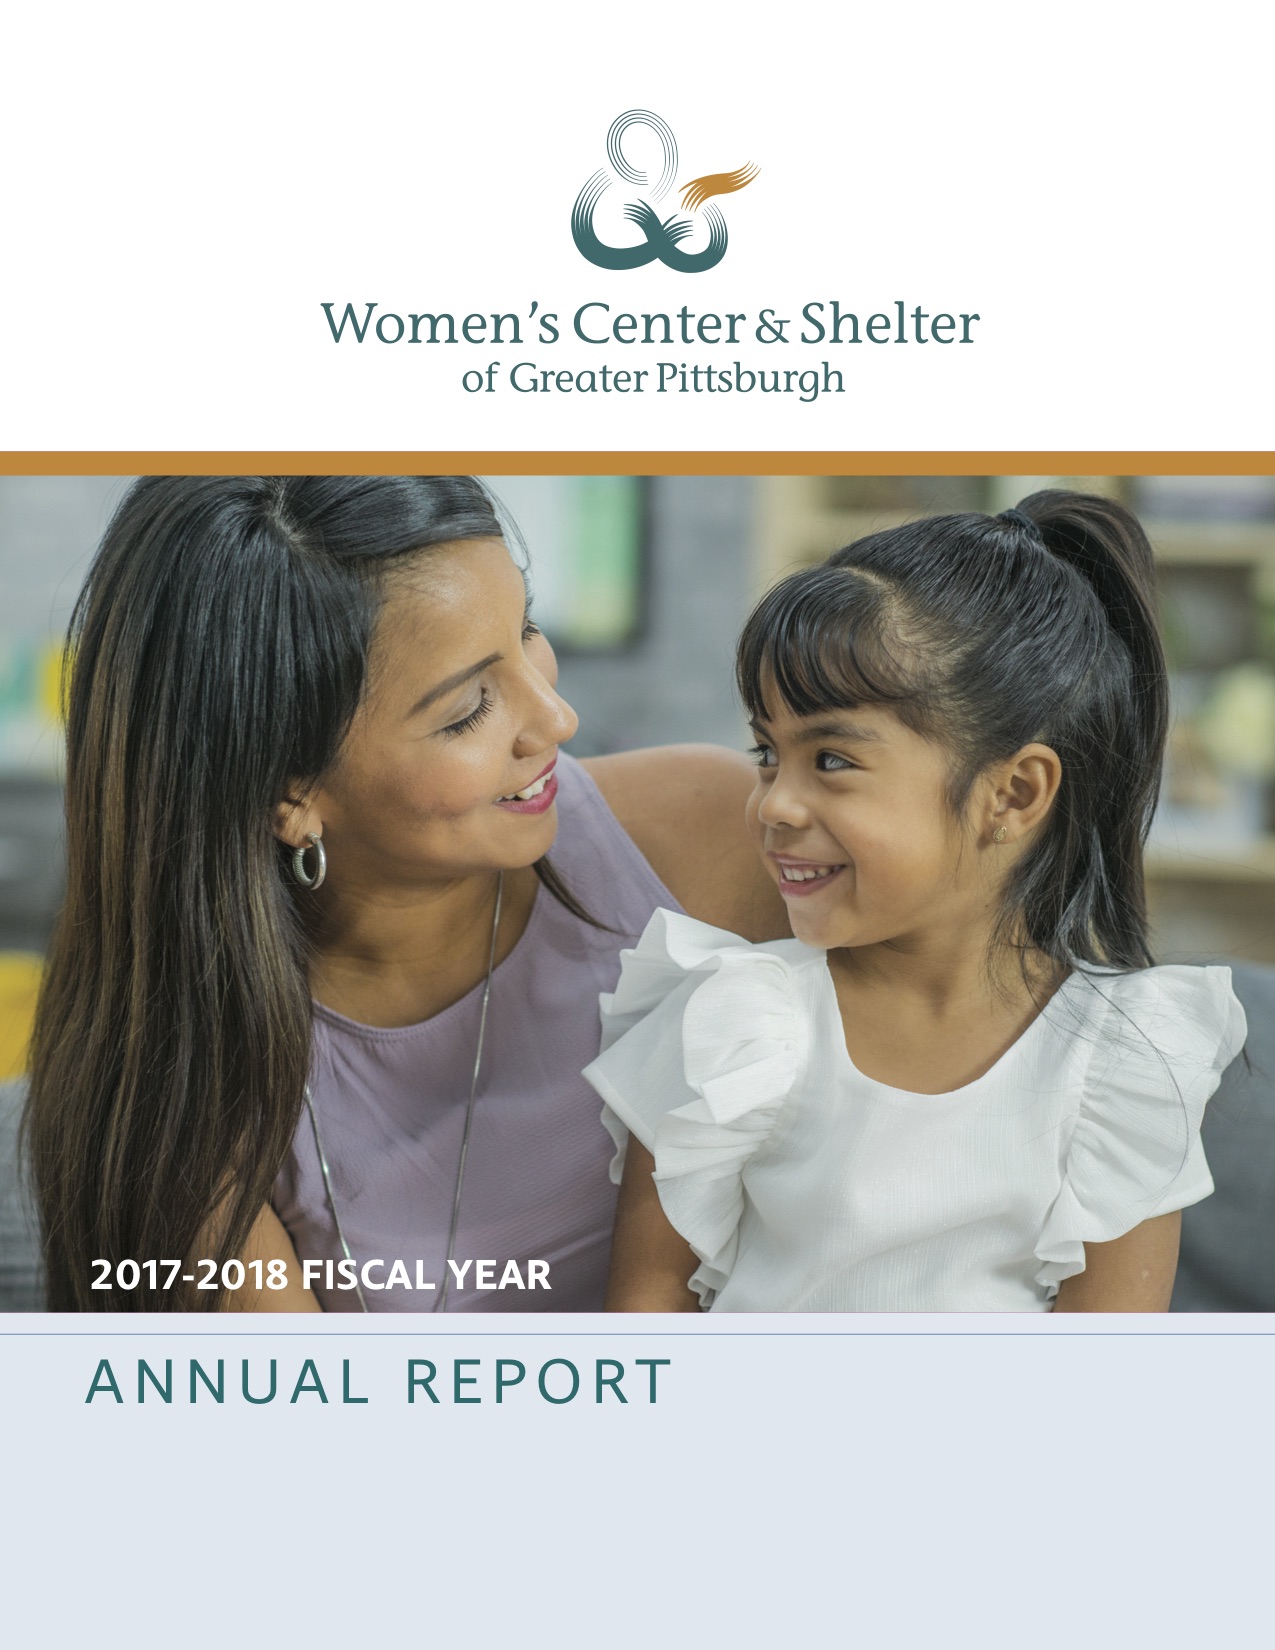 2017/2018 Annual Report